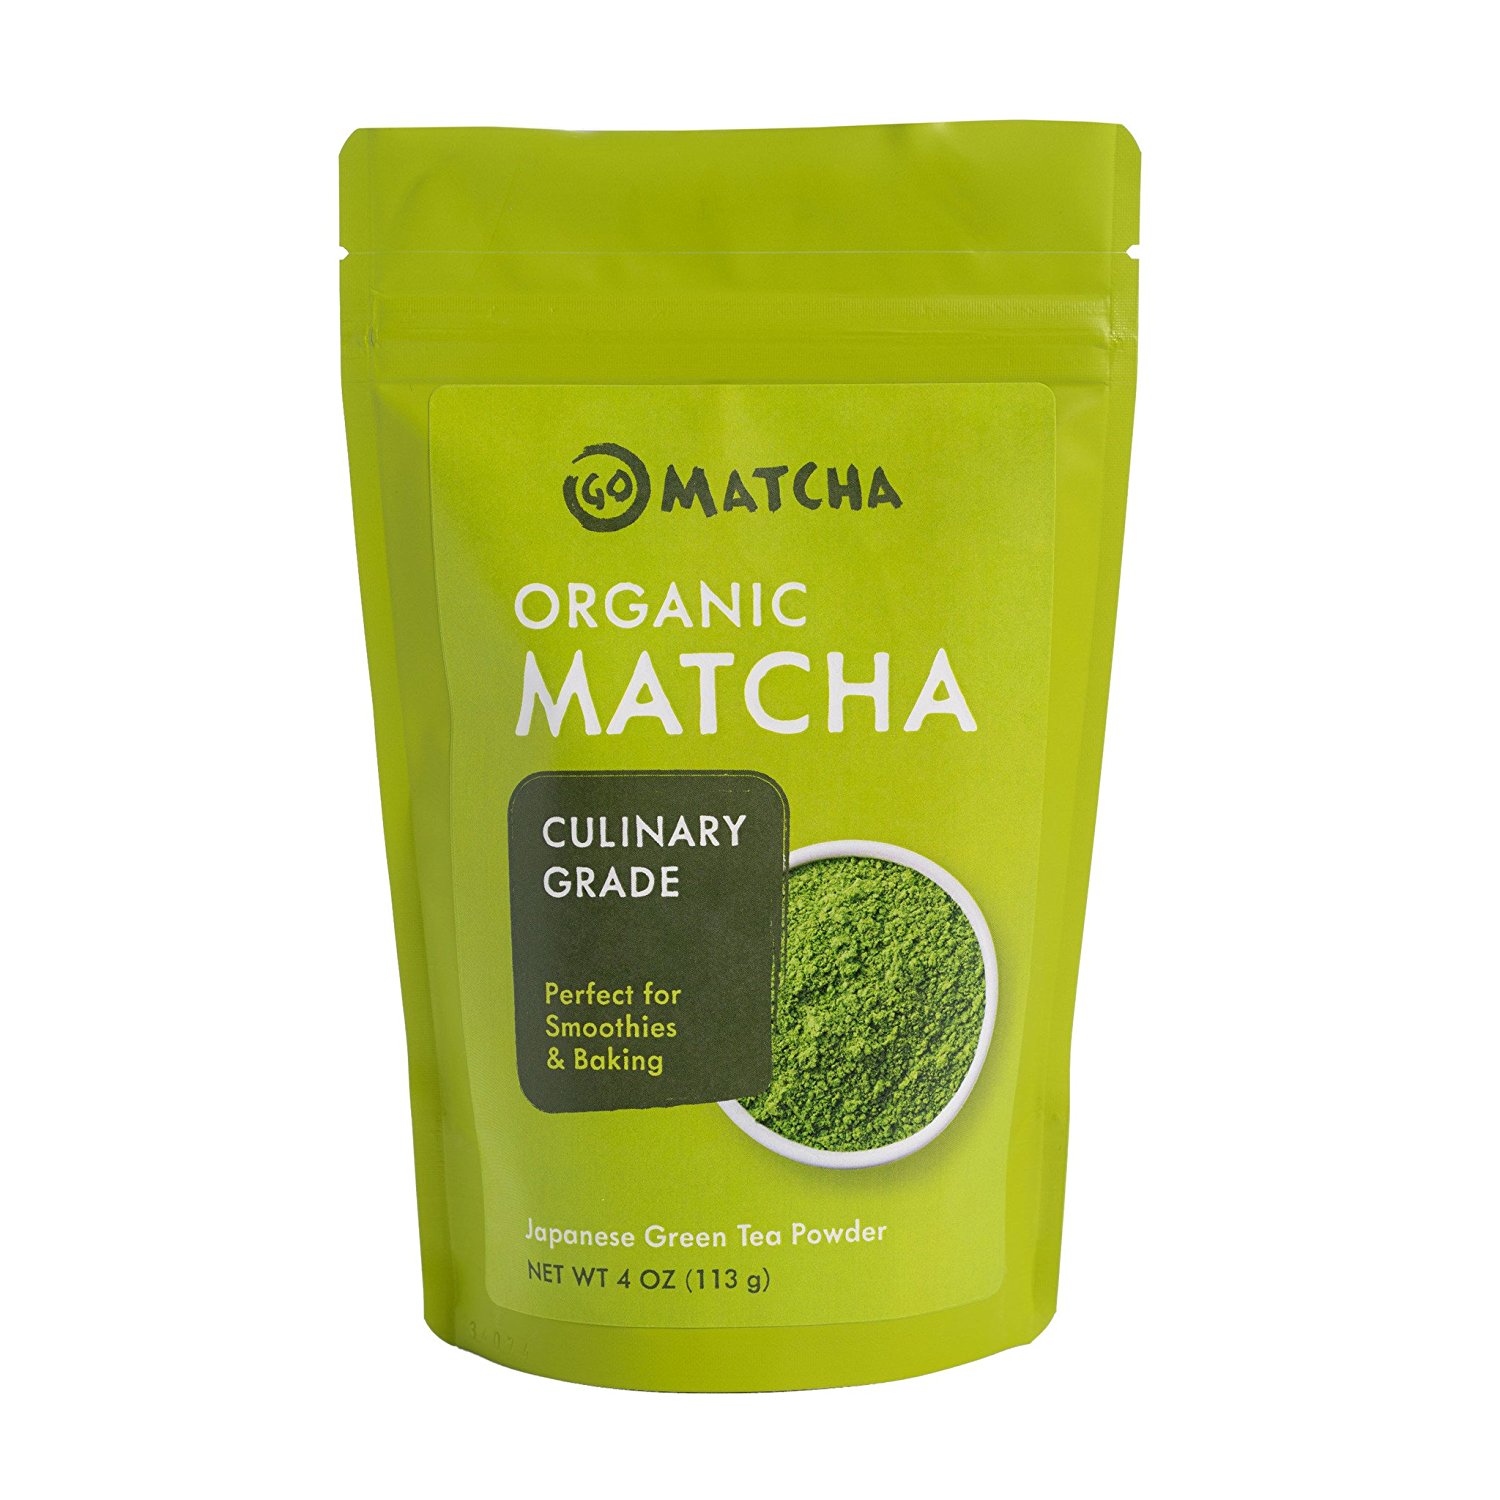 Go Matcha - Organic Matcha (Culinary Grade) 4 Oz.